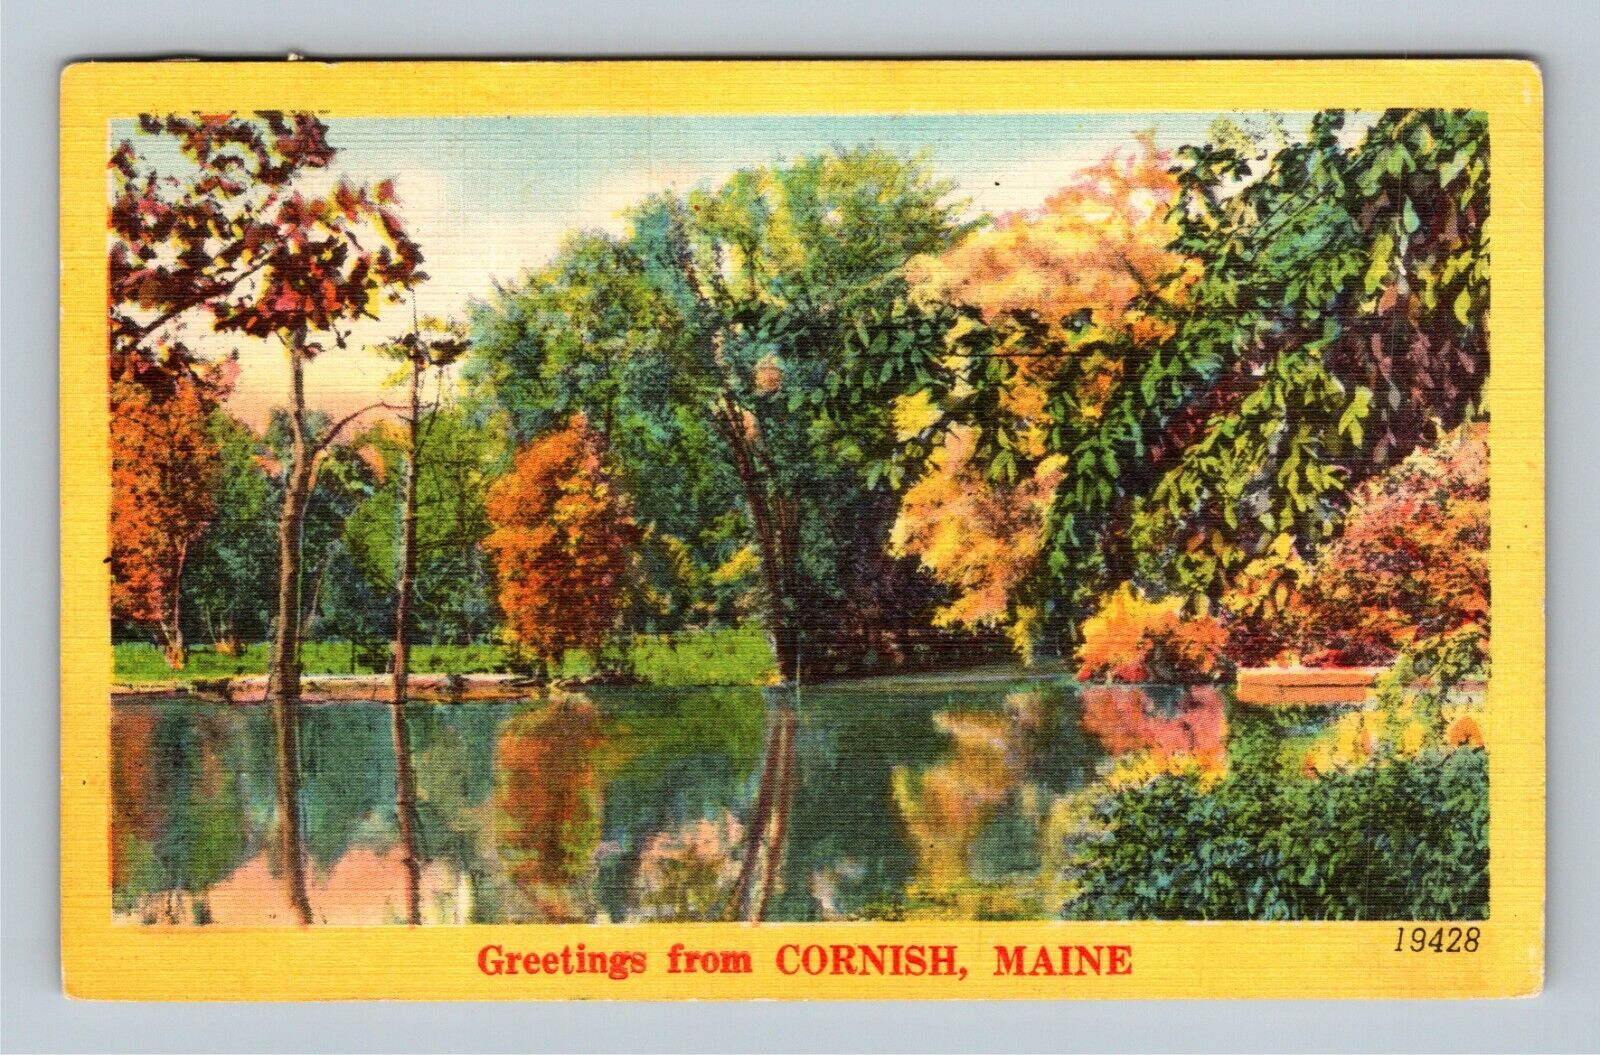 Cornish Me, Greetings, Scenic Autumn Mirror Lake View Linen Maine c1950 Postcard